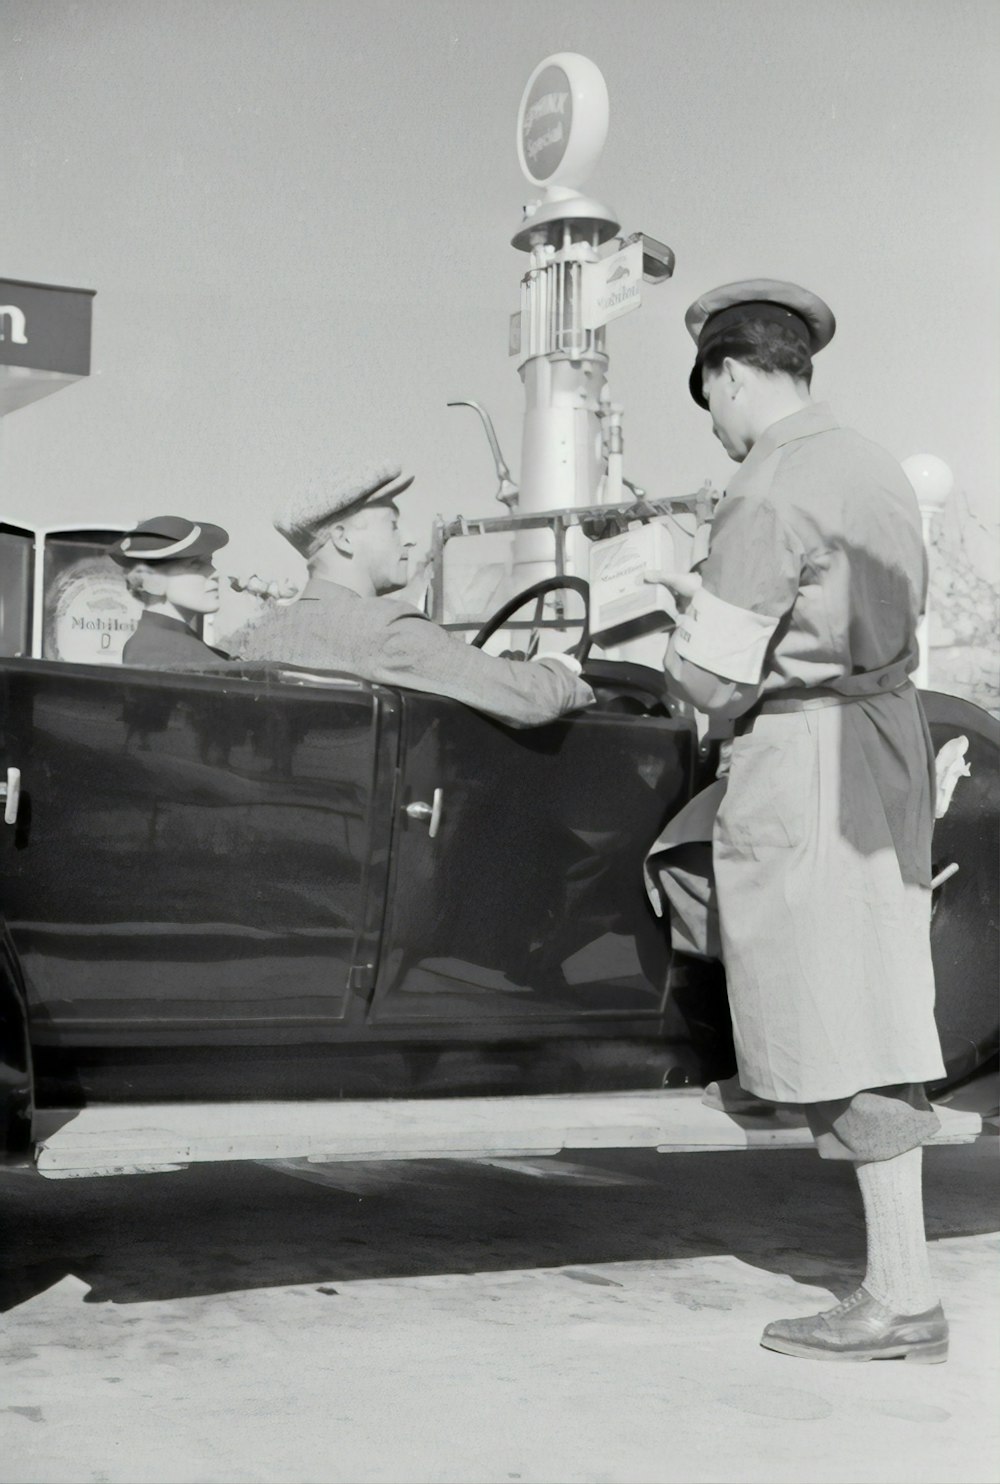 man in white uniform standing beside black car